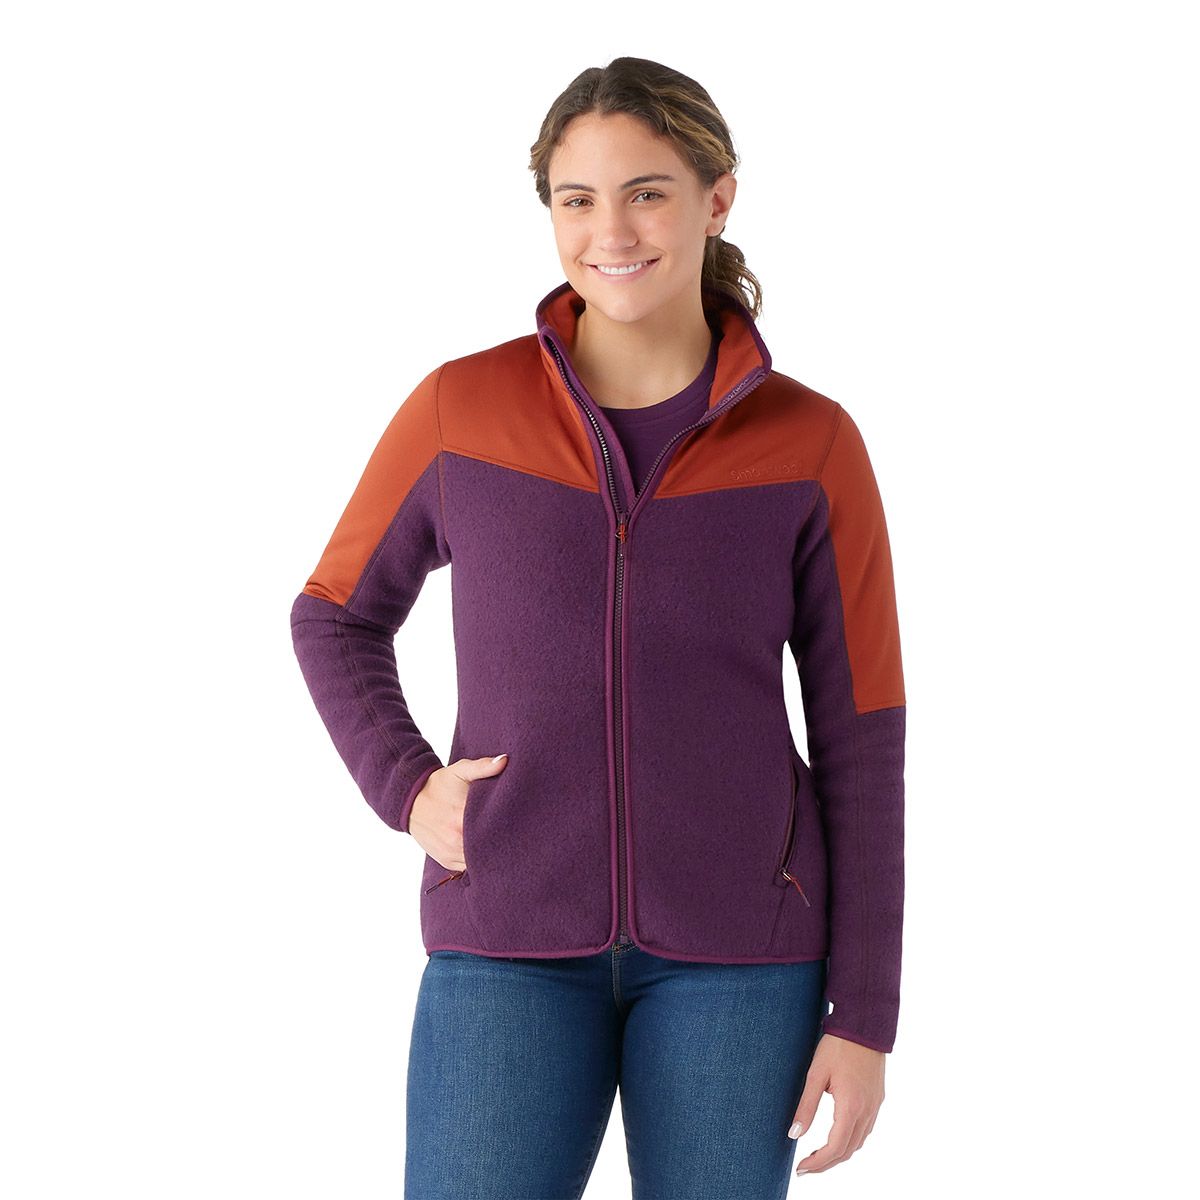 Smartwool Hudson Trail Fleece Jacket - Fleece Jacket Men's, Buy online